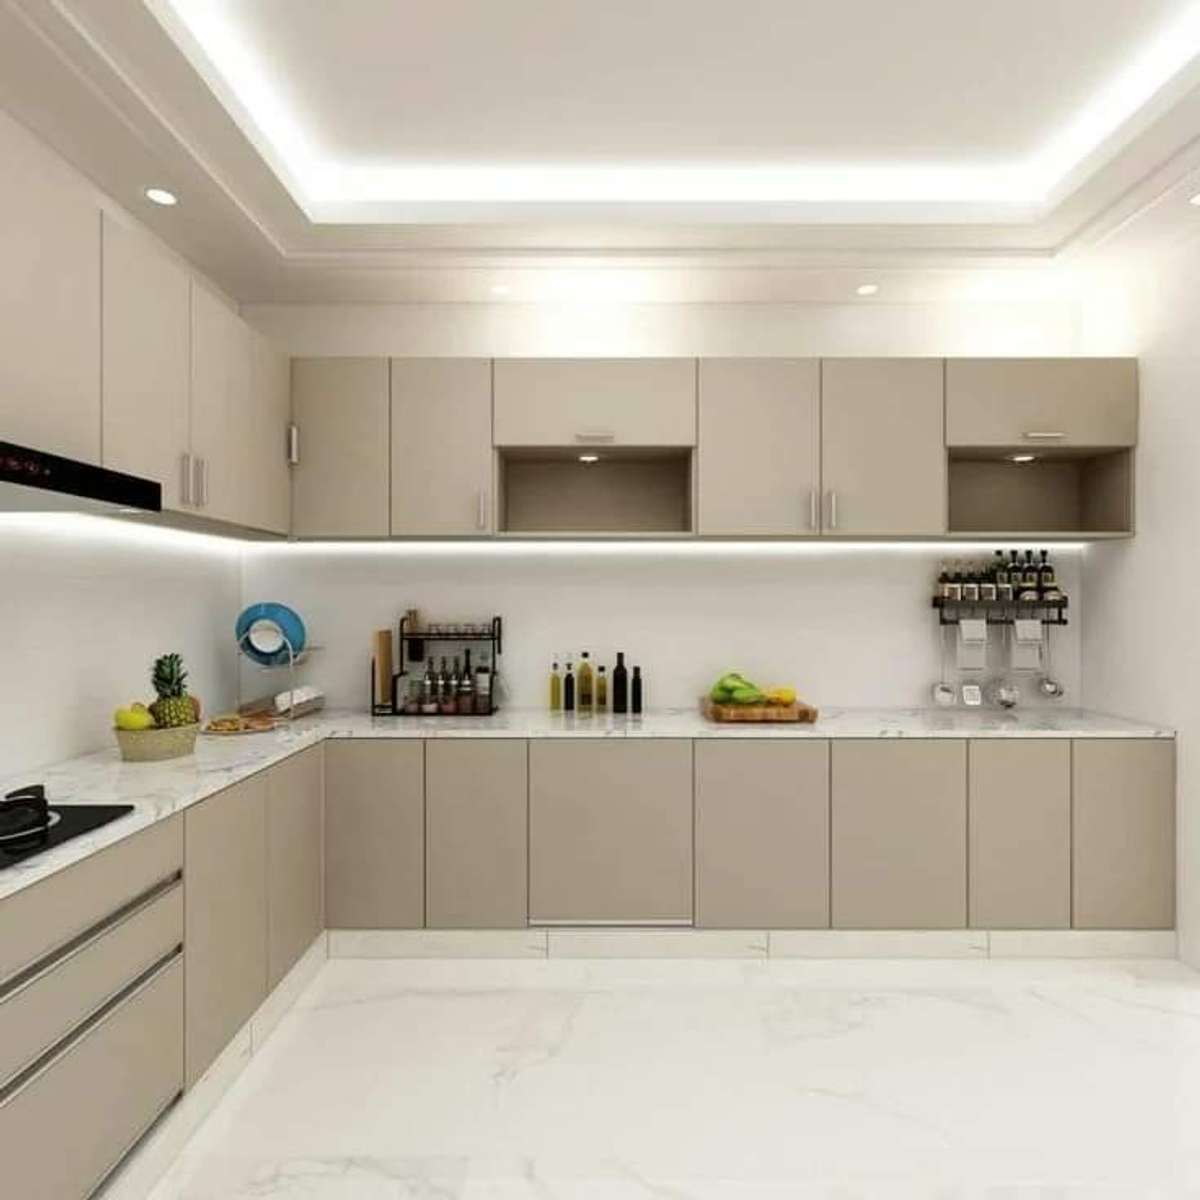 Best & impressive Living room design...
#monnaie #interiordesign #homedesign #architecturaldesign